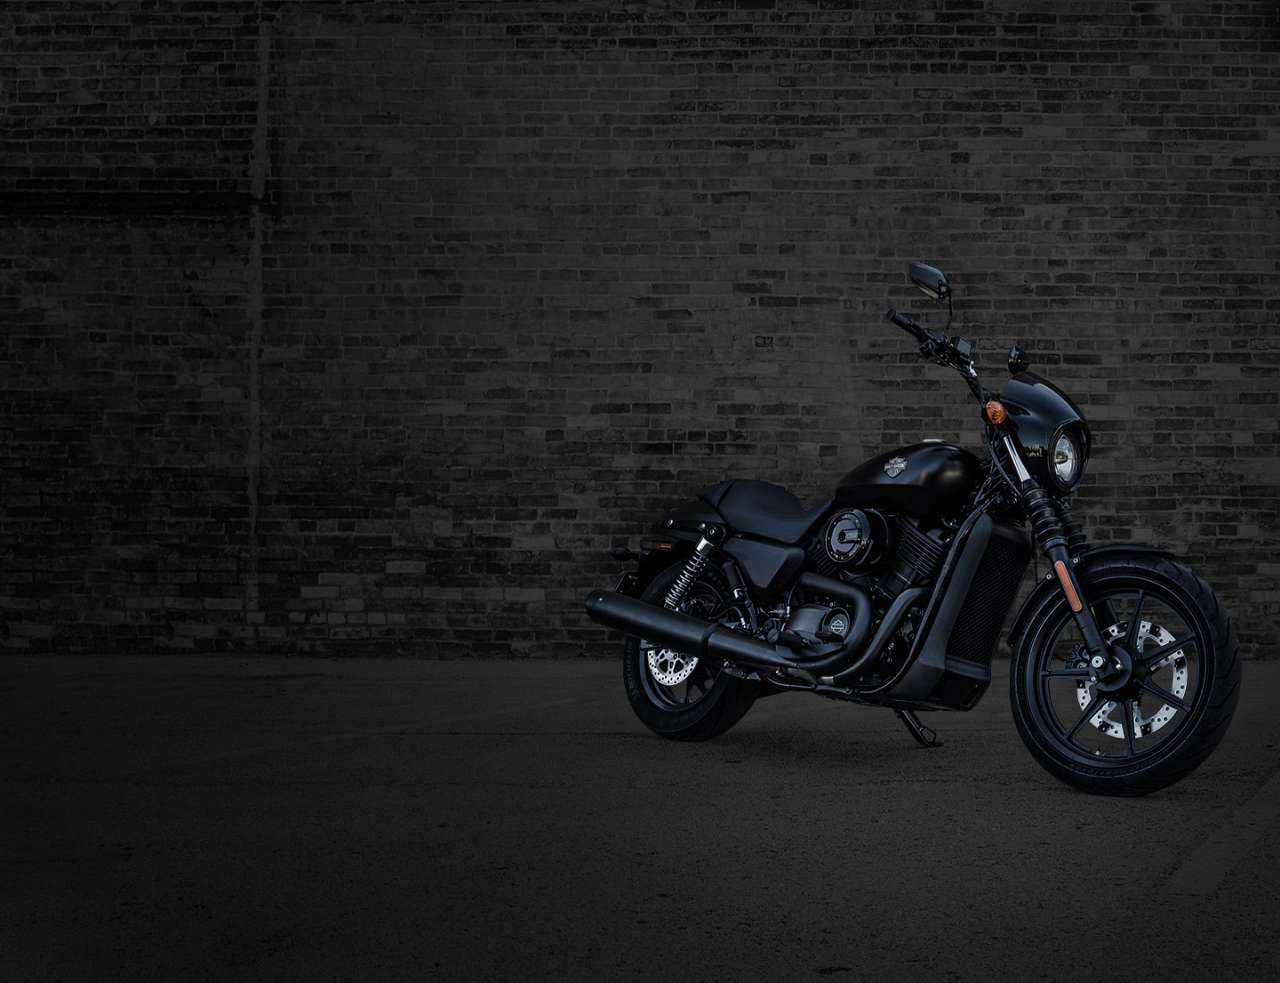 2014 Harley Davidson Street 500 Review